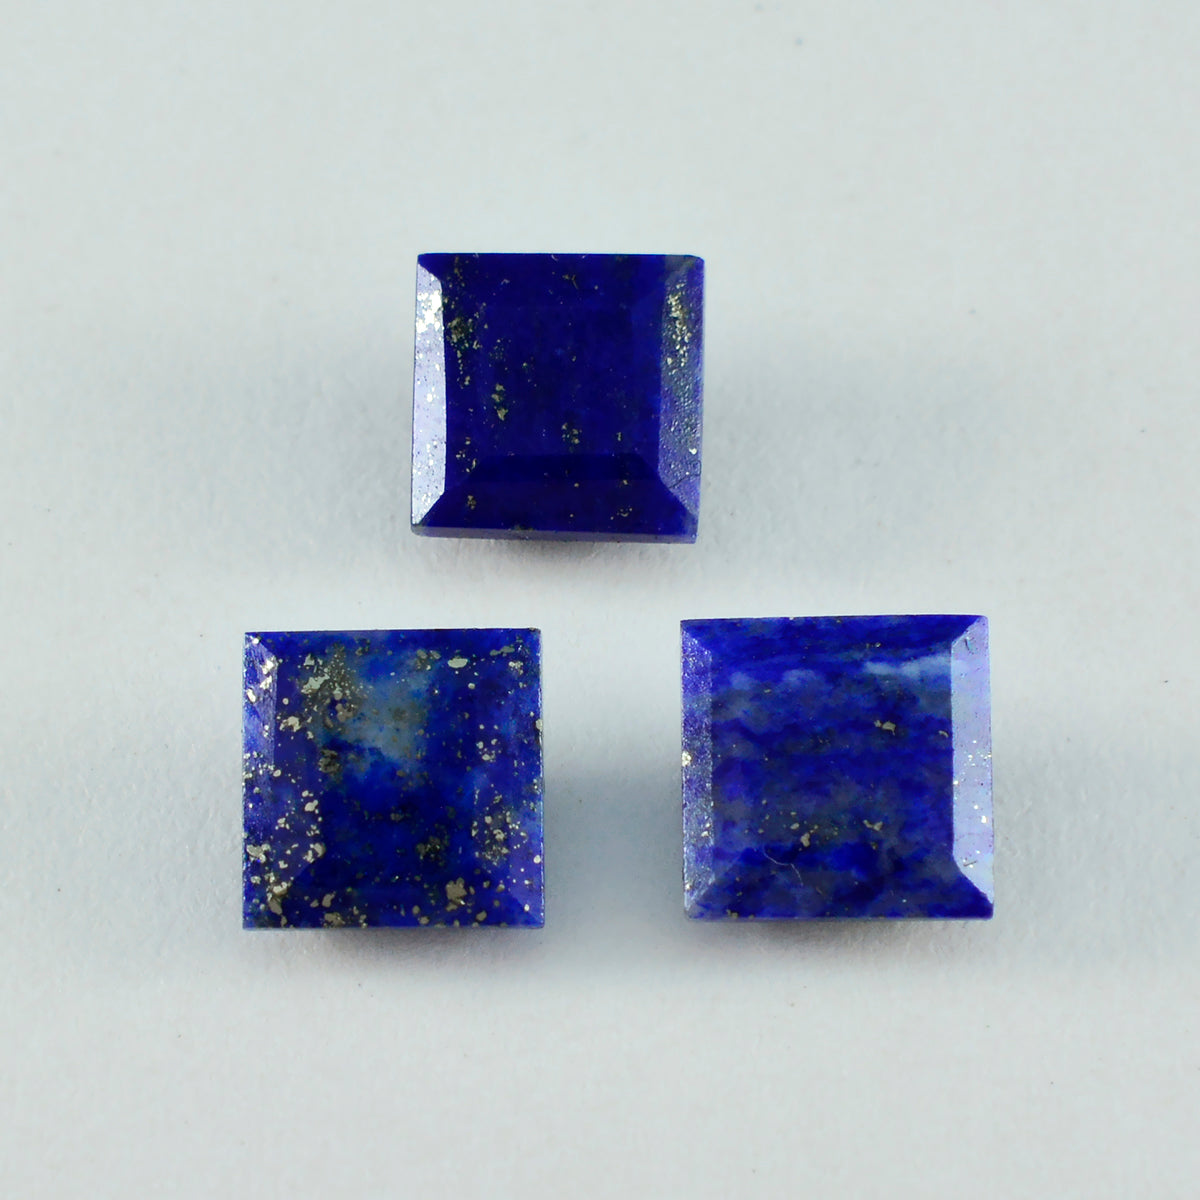 Riyogems 1PC Echte Blauwe Lapis Lazuli Facet 10x10 mm Vierkante Vorm mooie Kwaliteit Losse Edelsteen